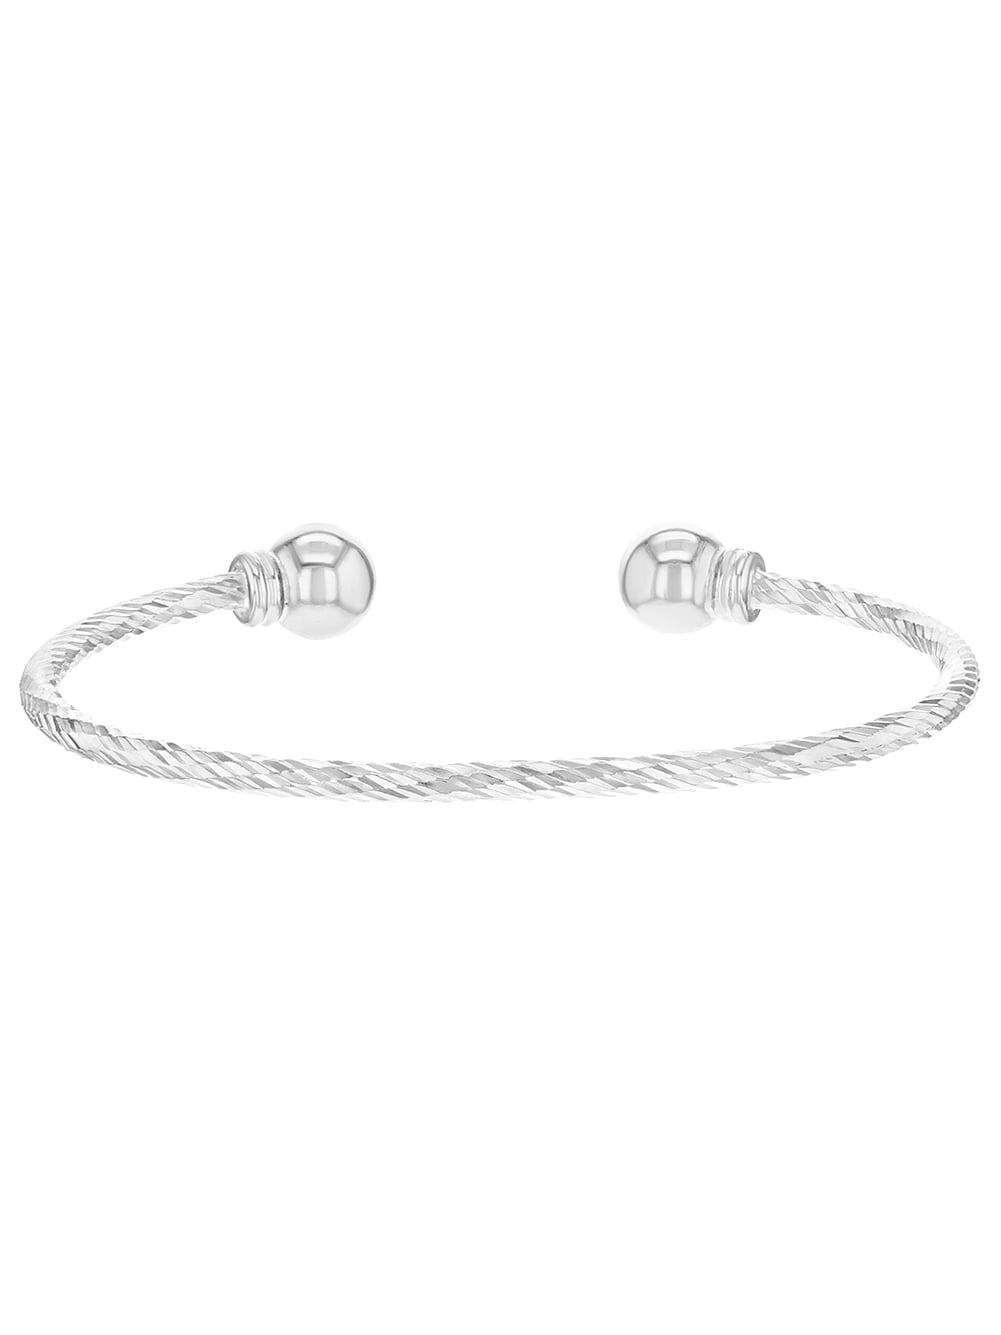 925 Sterling Silver Plain Cuff Bangle Bracelet for Little Girls